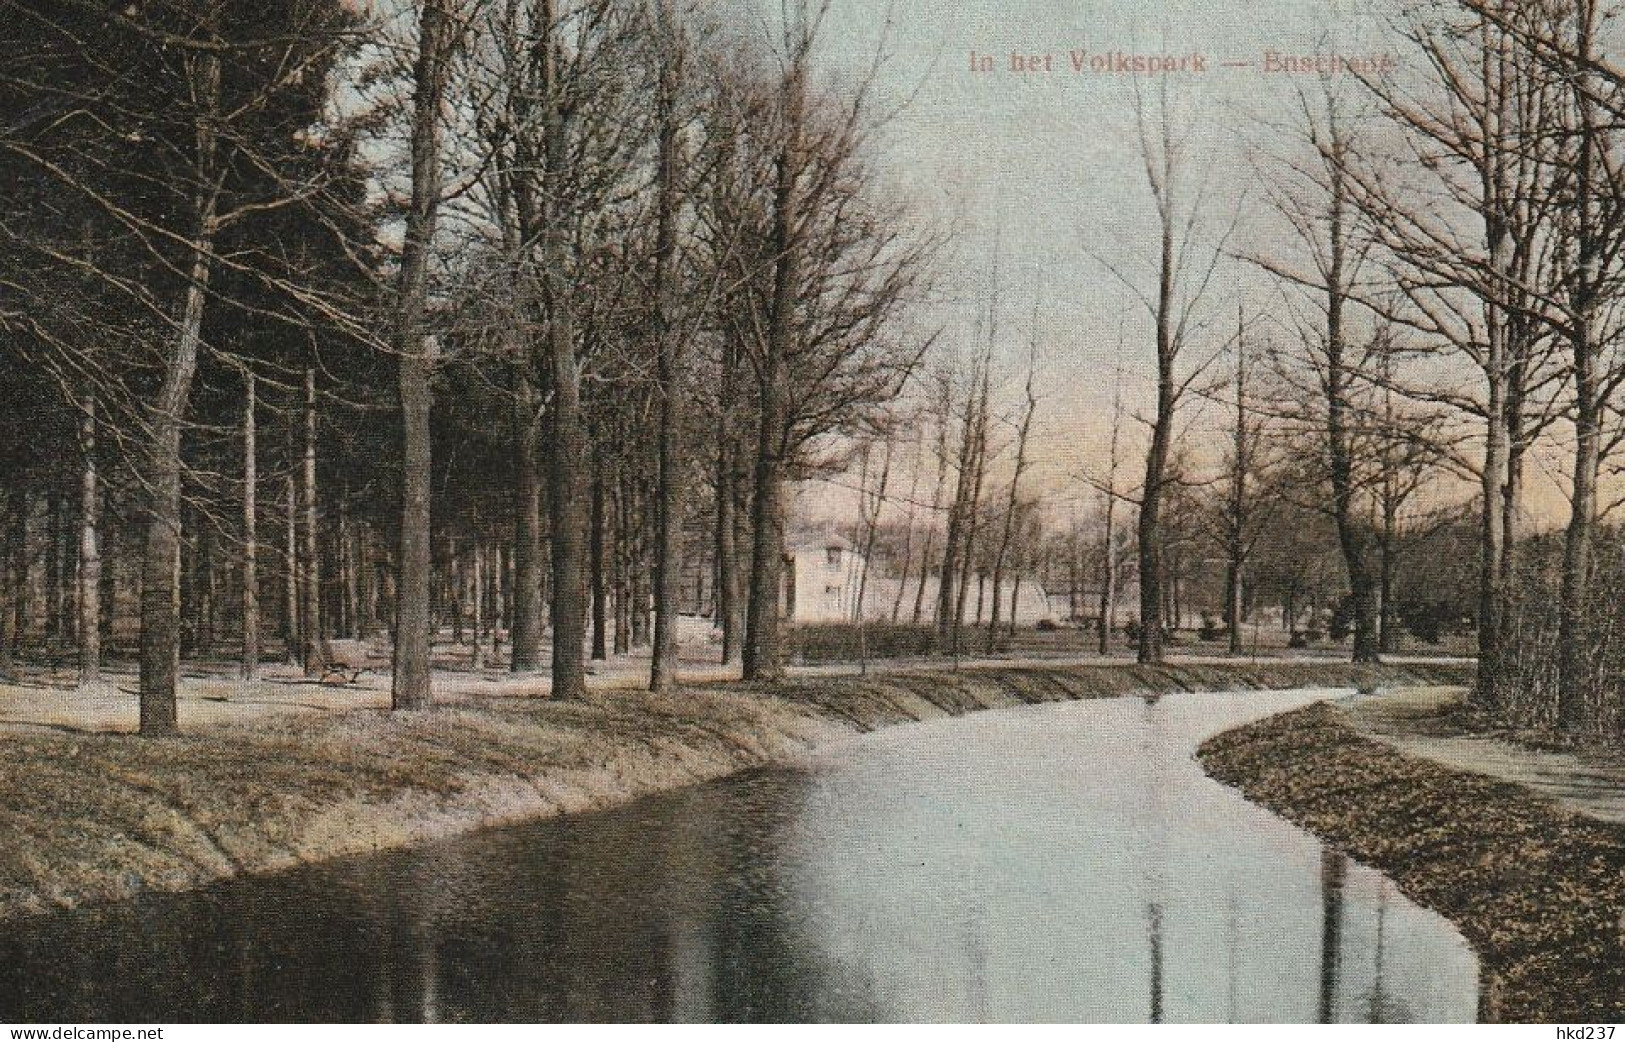 Enschede In Het Volkspark # 1909   3975 - Enschede